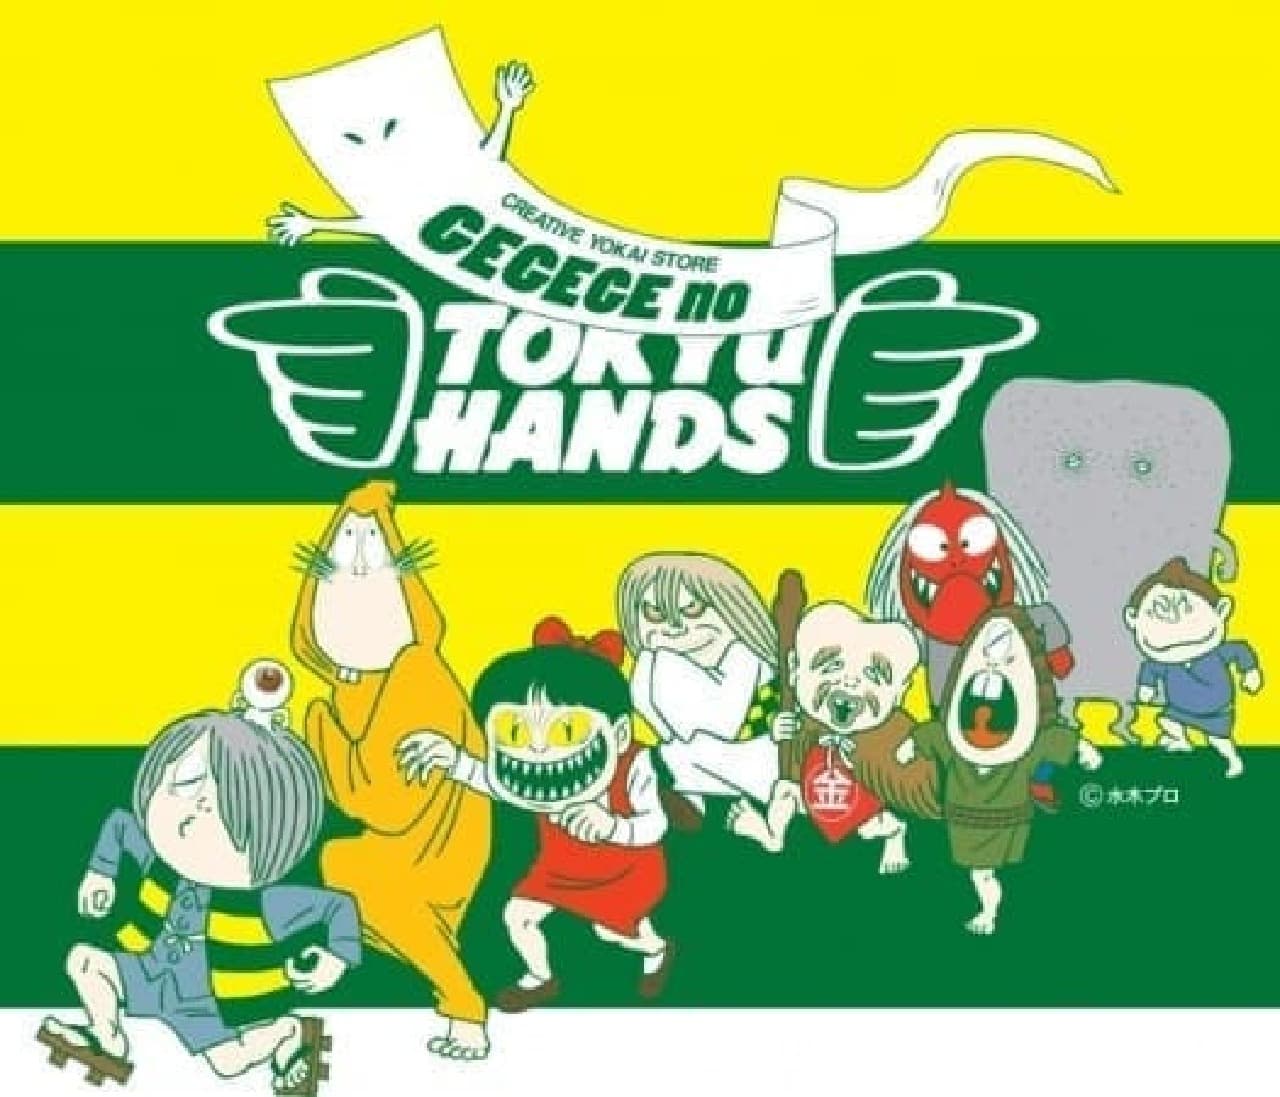 Tokyu Hands x GeGeGe no Kitaro collaboration event